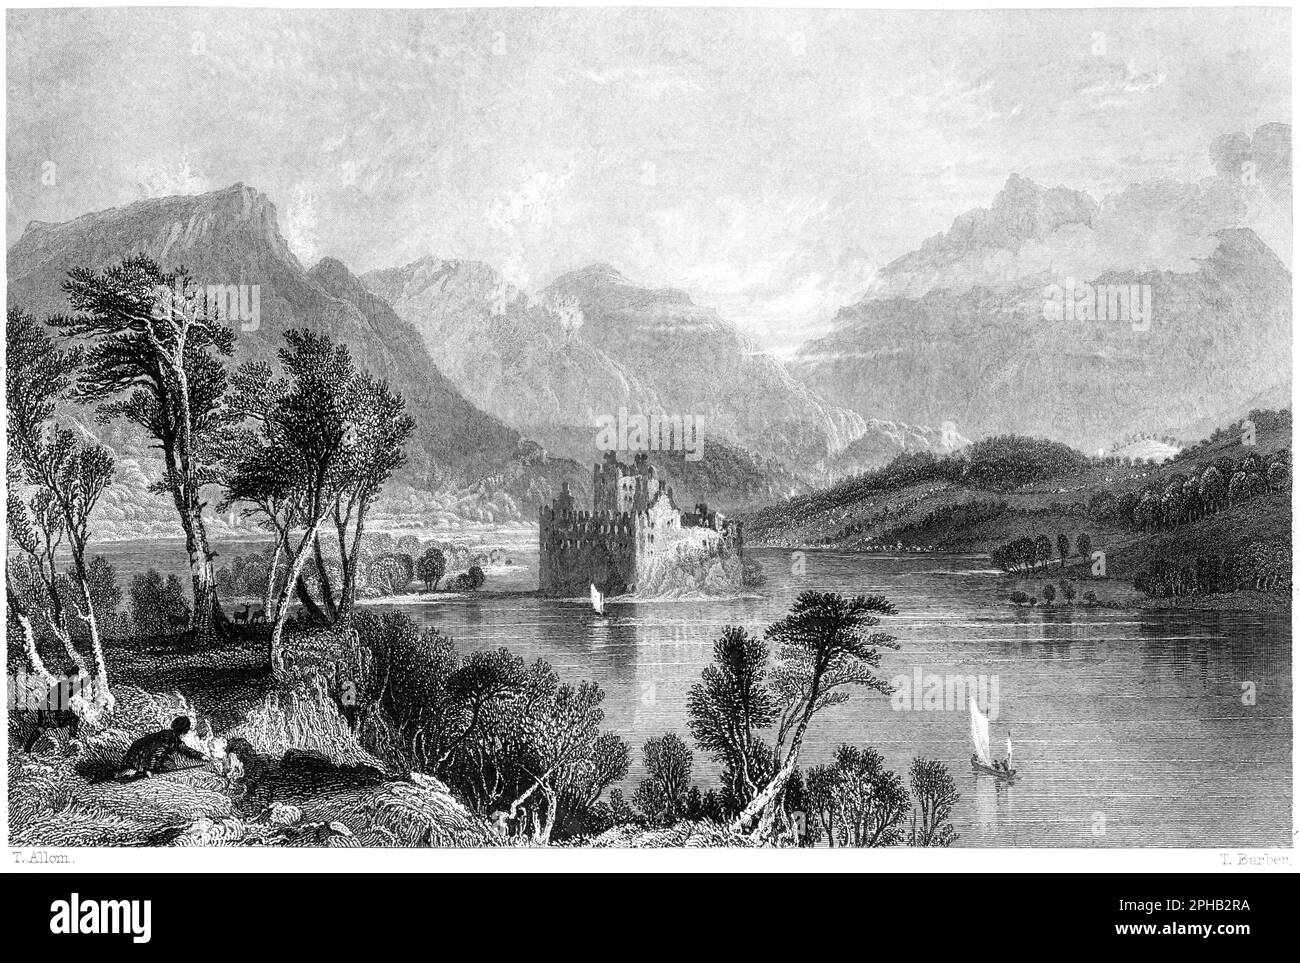 Un grabado del castillo de Kilchurn, Loch Awe mirando hacia Dalmally, Argyleshire, Escocia Reino Unido escaneado a alta resolución de un libro impreso en 1840. Foto de stock